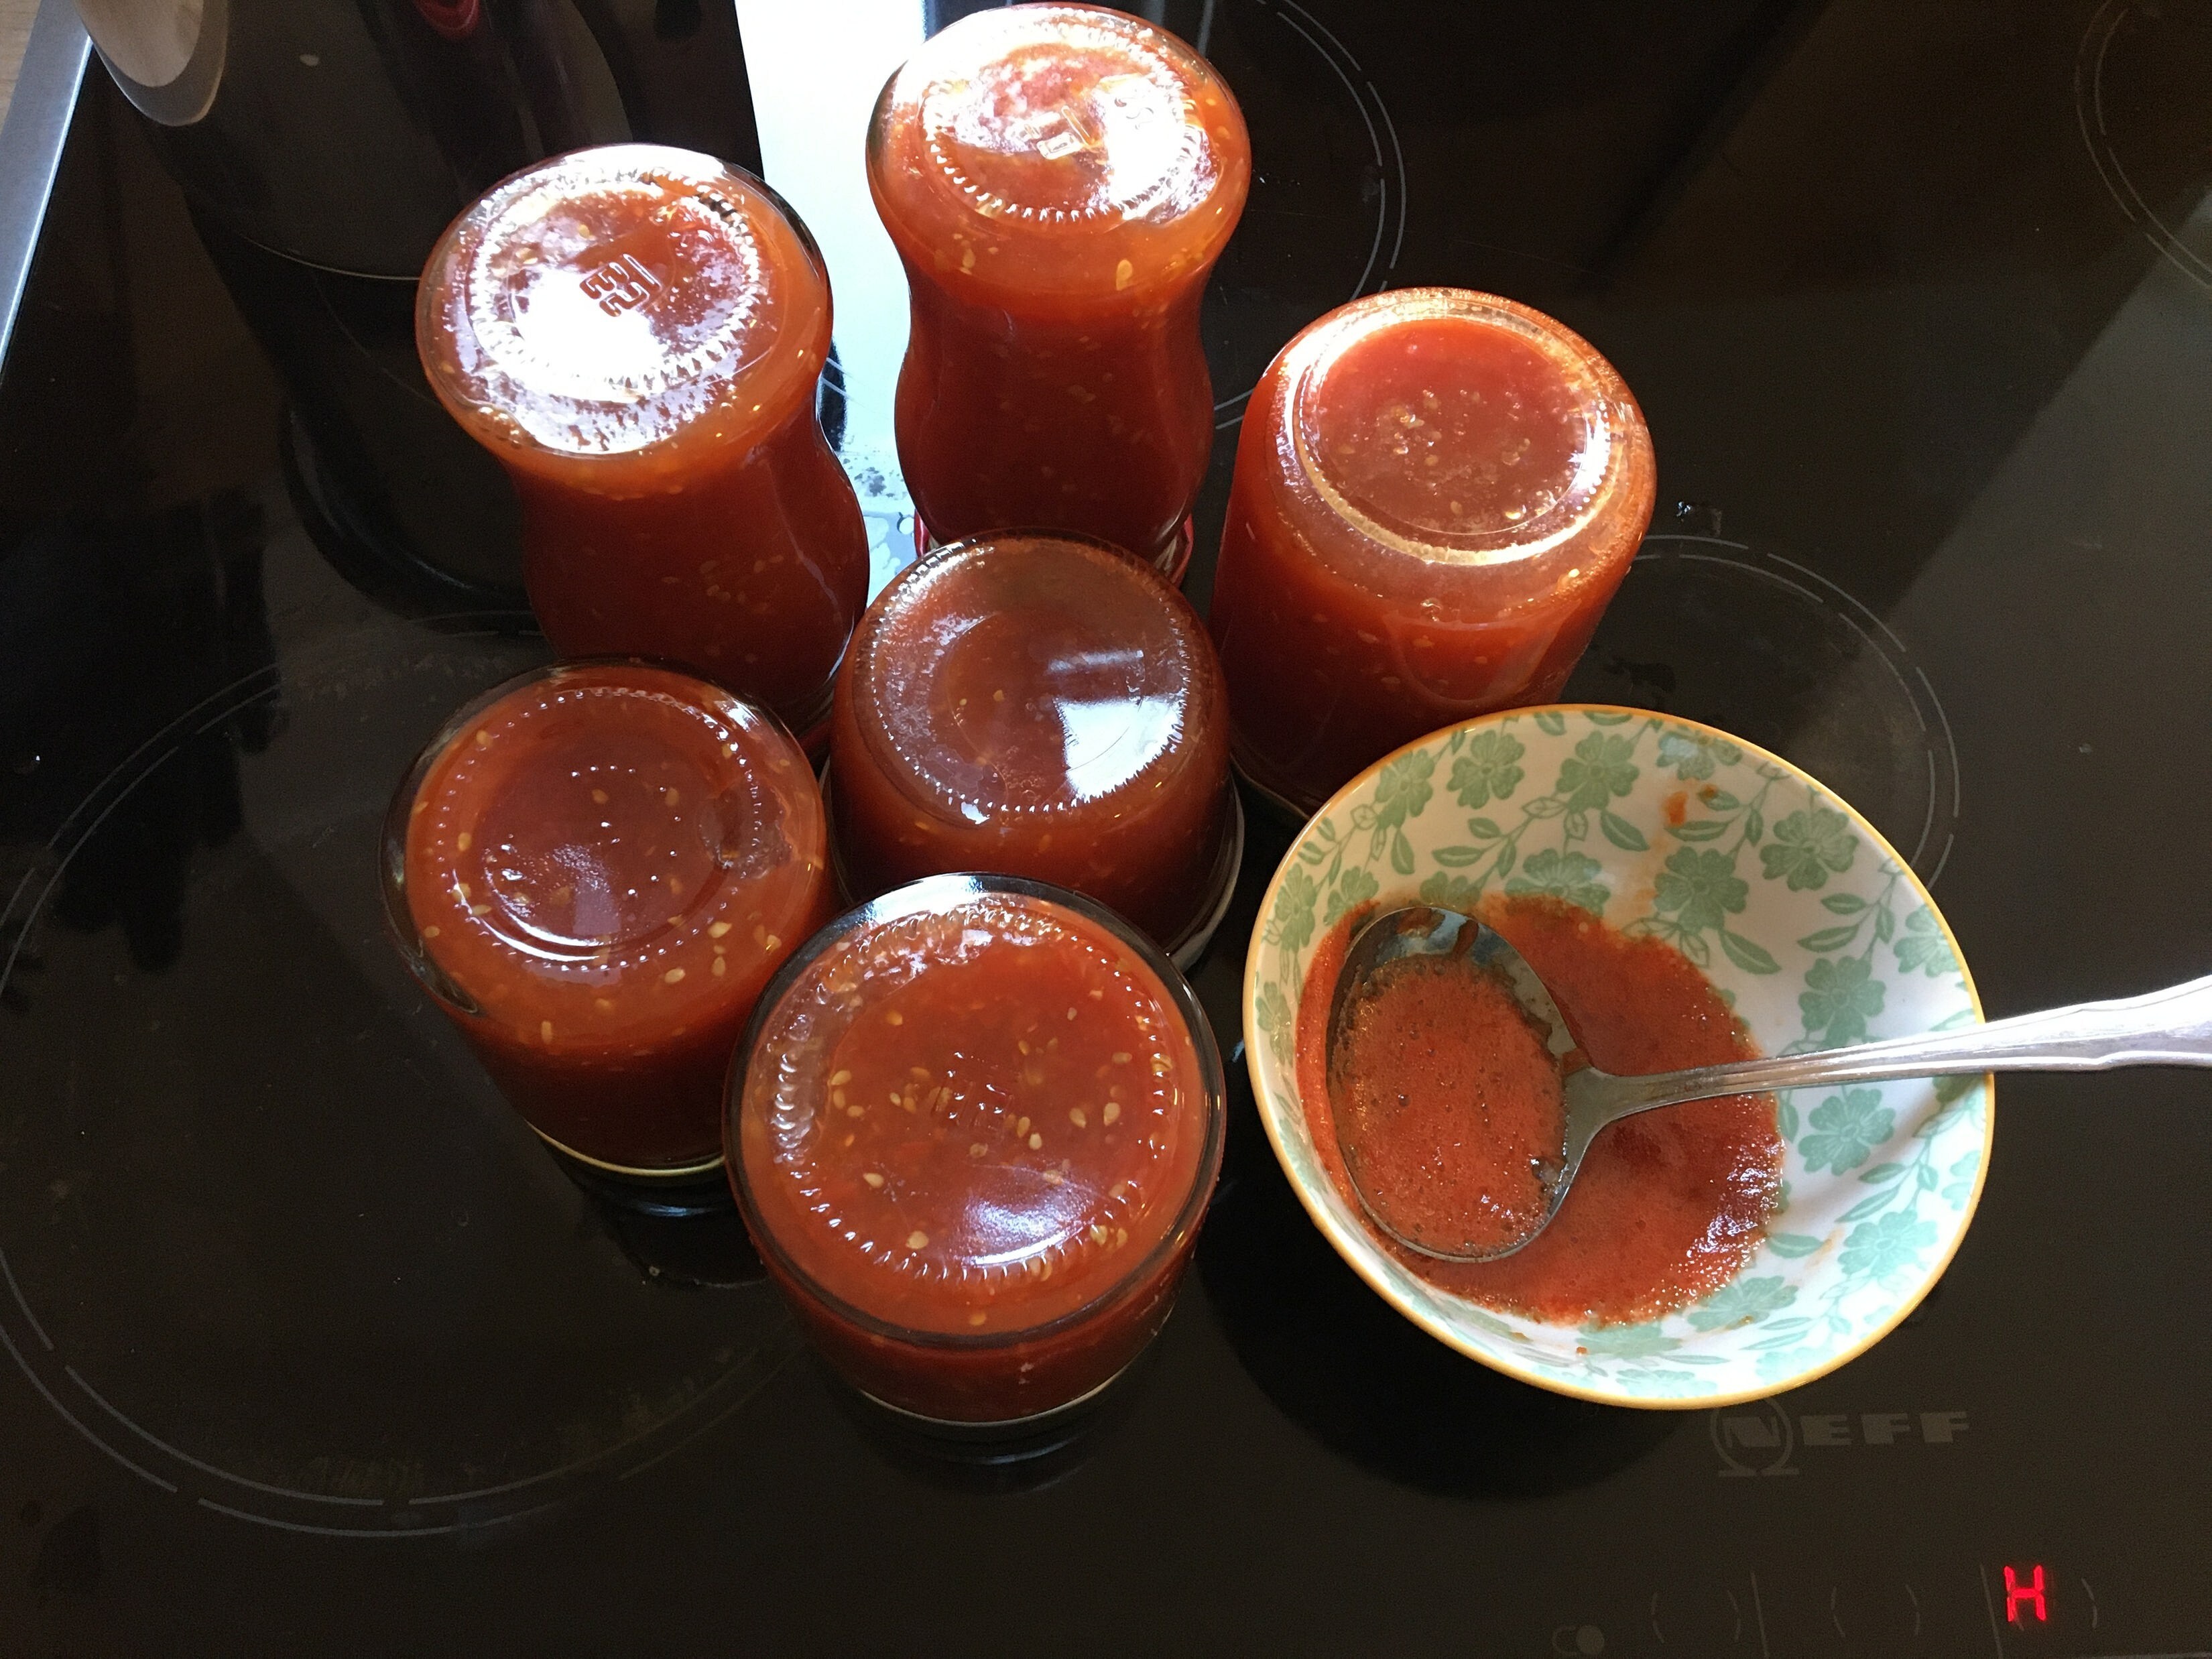 Rezept: Tomatenmarmelade selber machen - Schritt für Schritt | MDR.DE